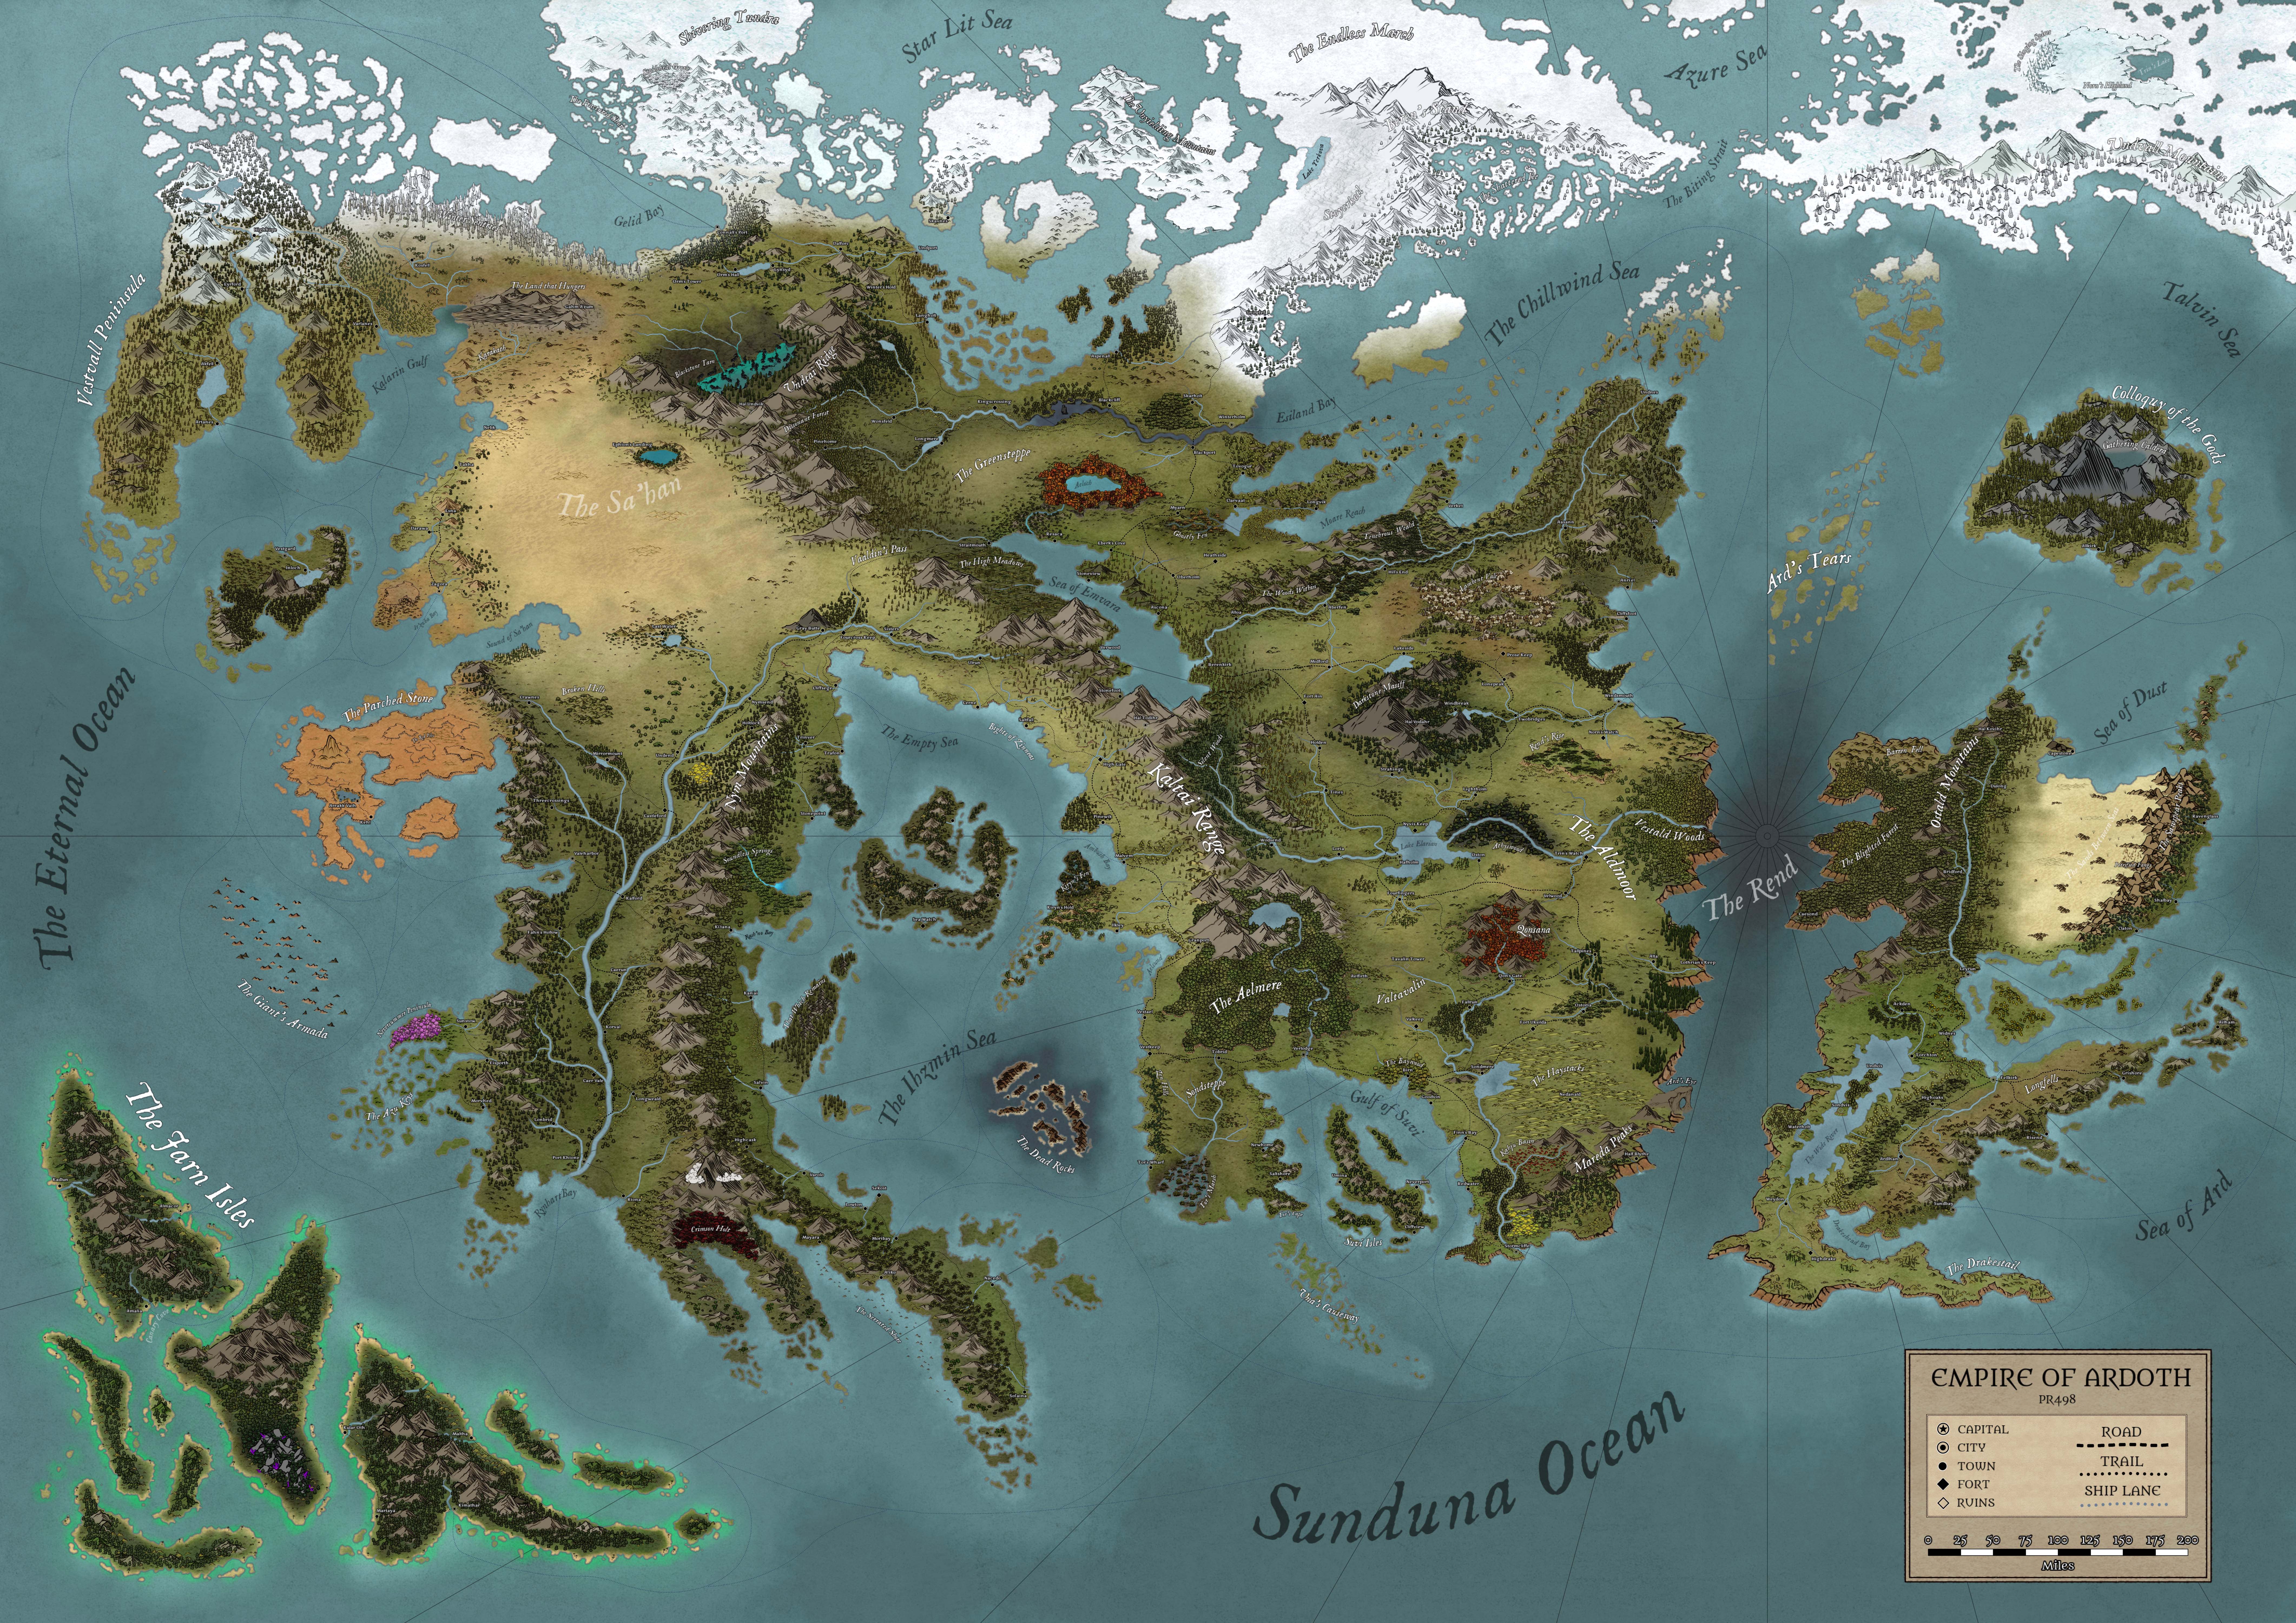 Fantasy world map